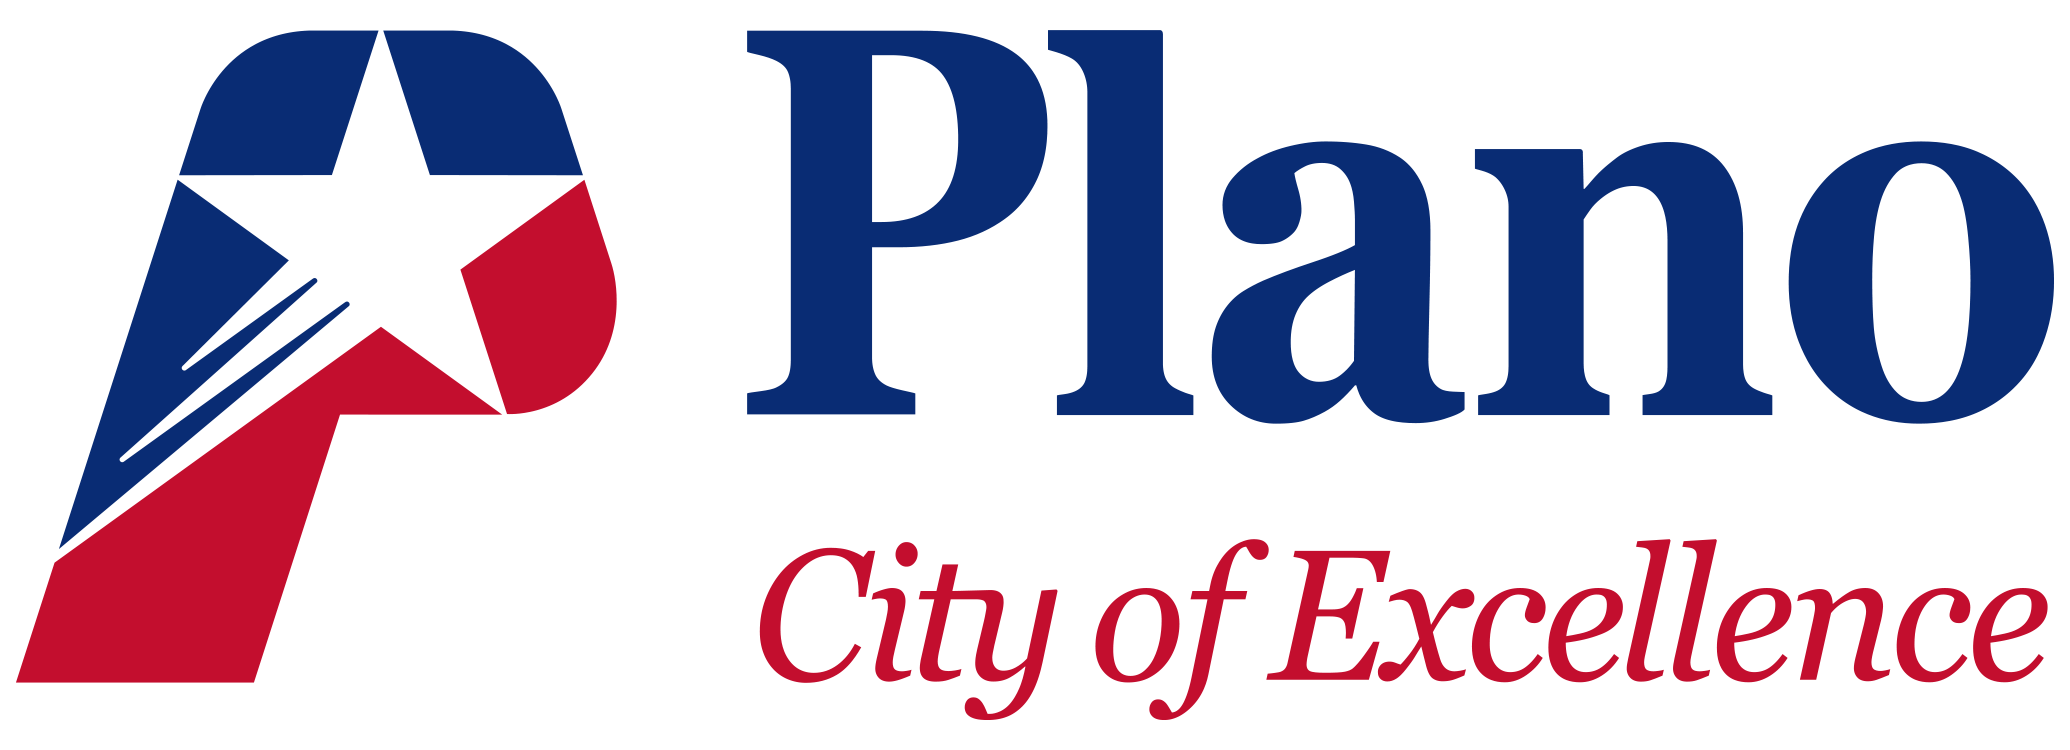 City of Plano logo